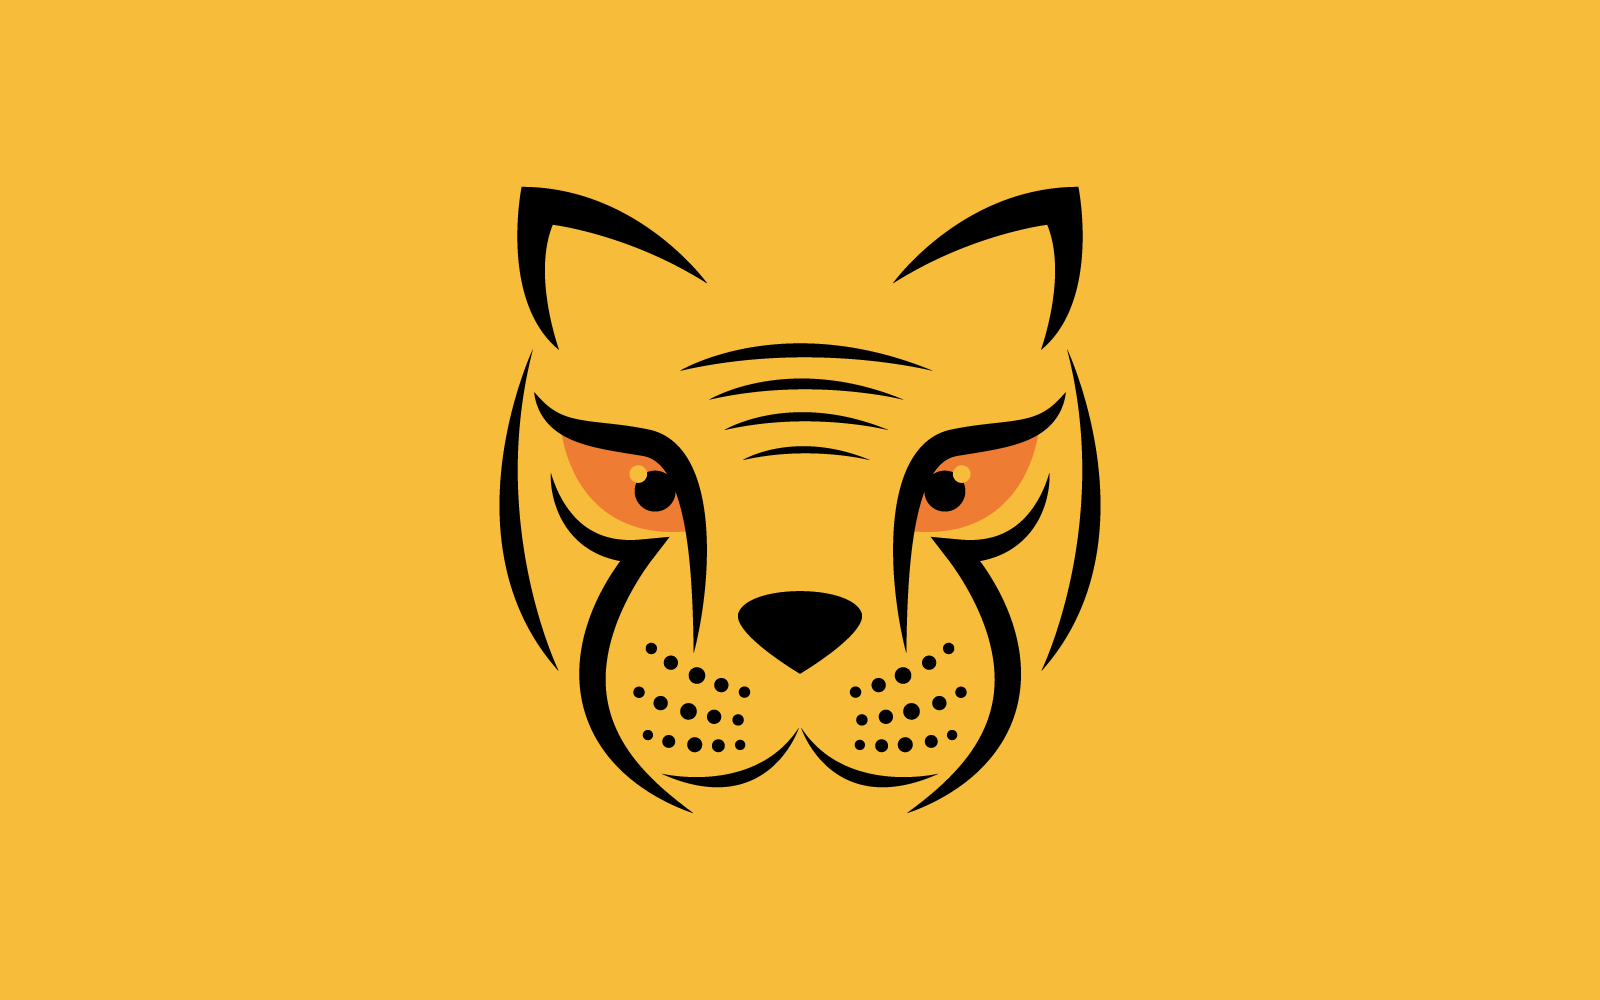 Tiger face illustration logo template vector flat design